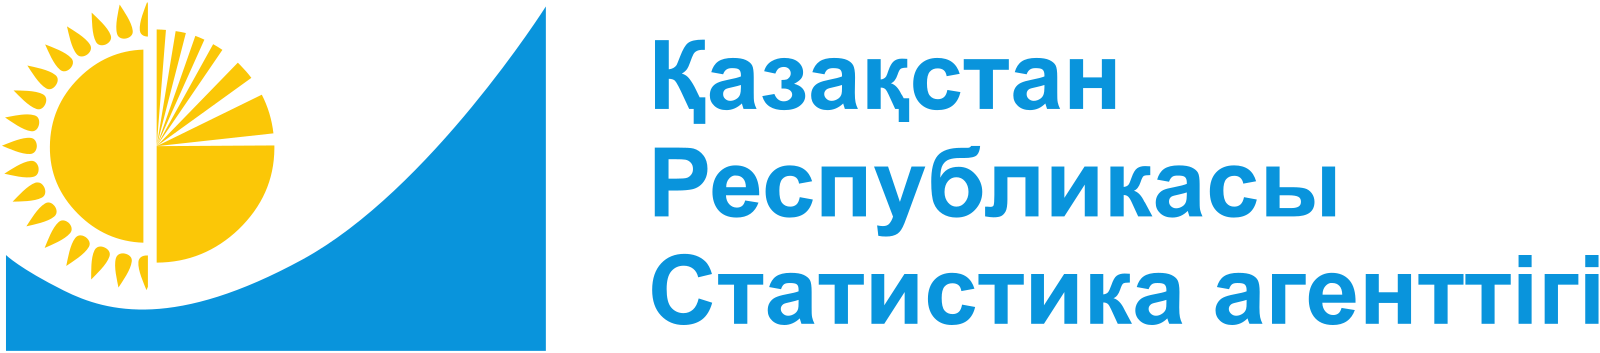 Сайт департамента статистики. Логотип статистики. Эмблема статистики Казахстана. Агентство по статистике лого. Бюро национальной статистики Аспр РК.